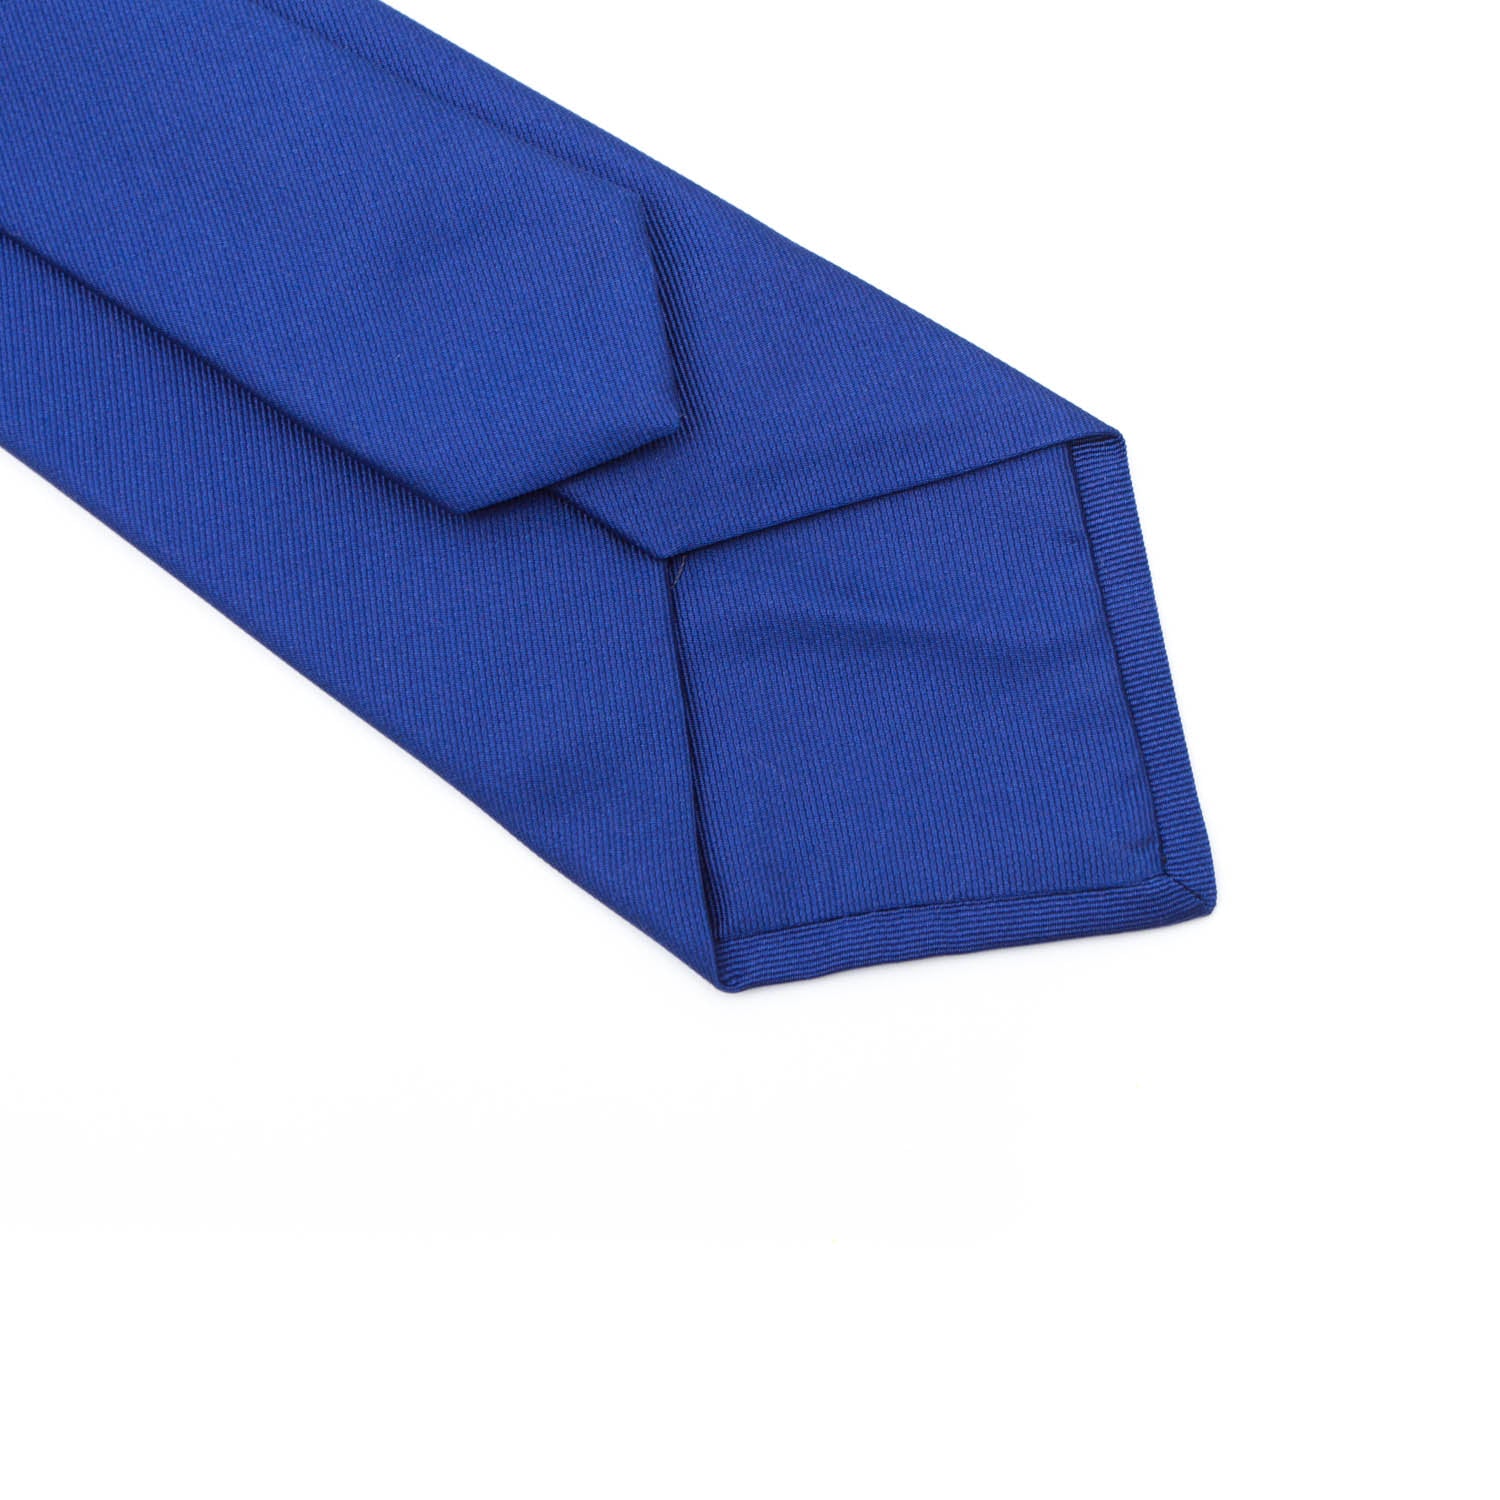 A Sovereign Grade Blue Satin Tie from KirbyAllison.com.